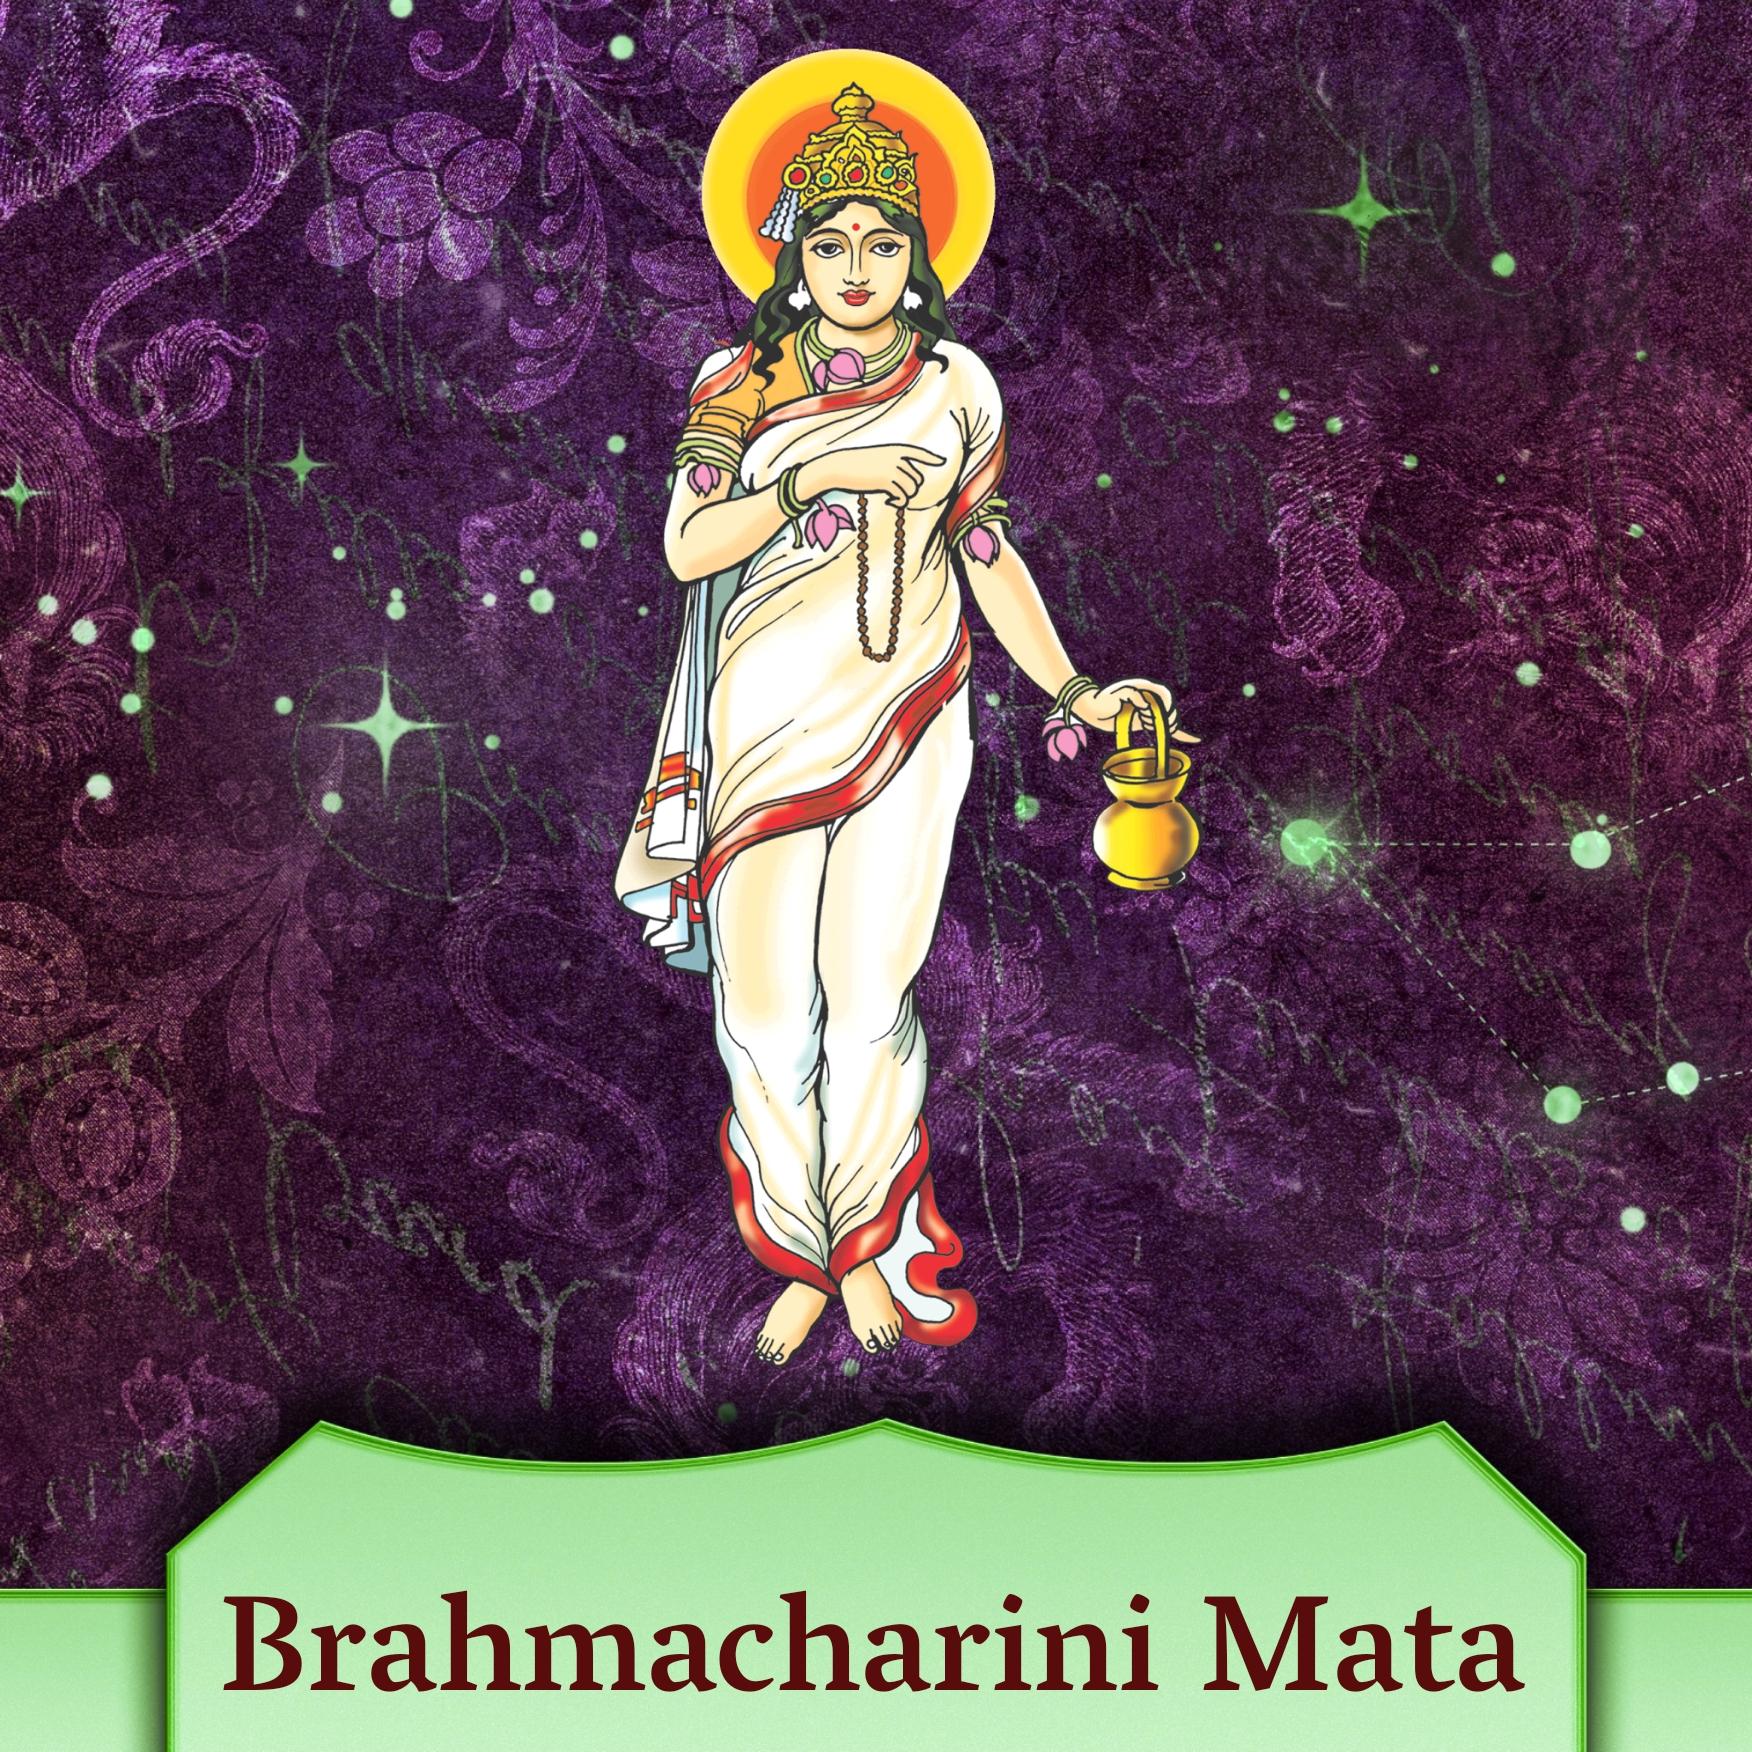 Brahmacharini Mata Images